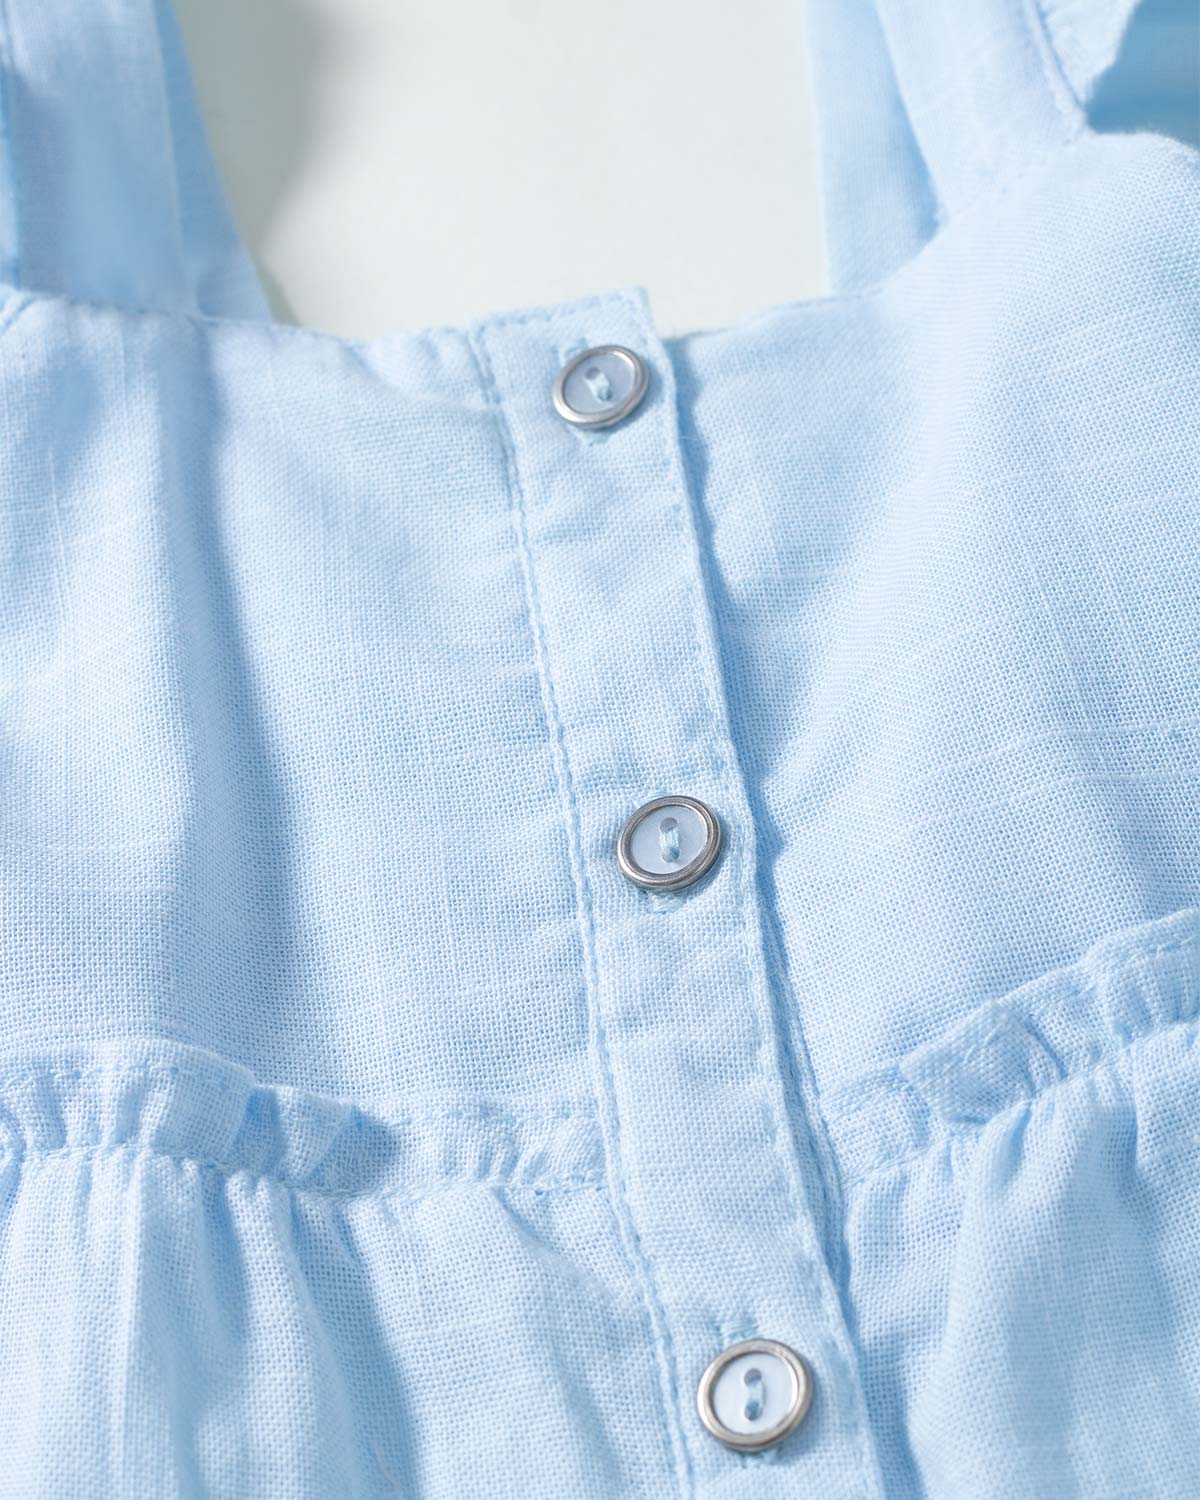 Vestido azul de tiras con boleros y botonadura para niña